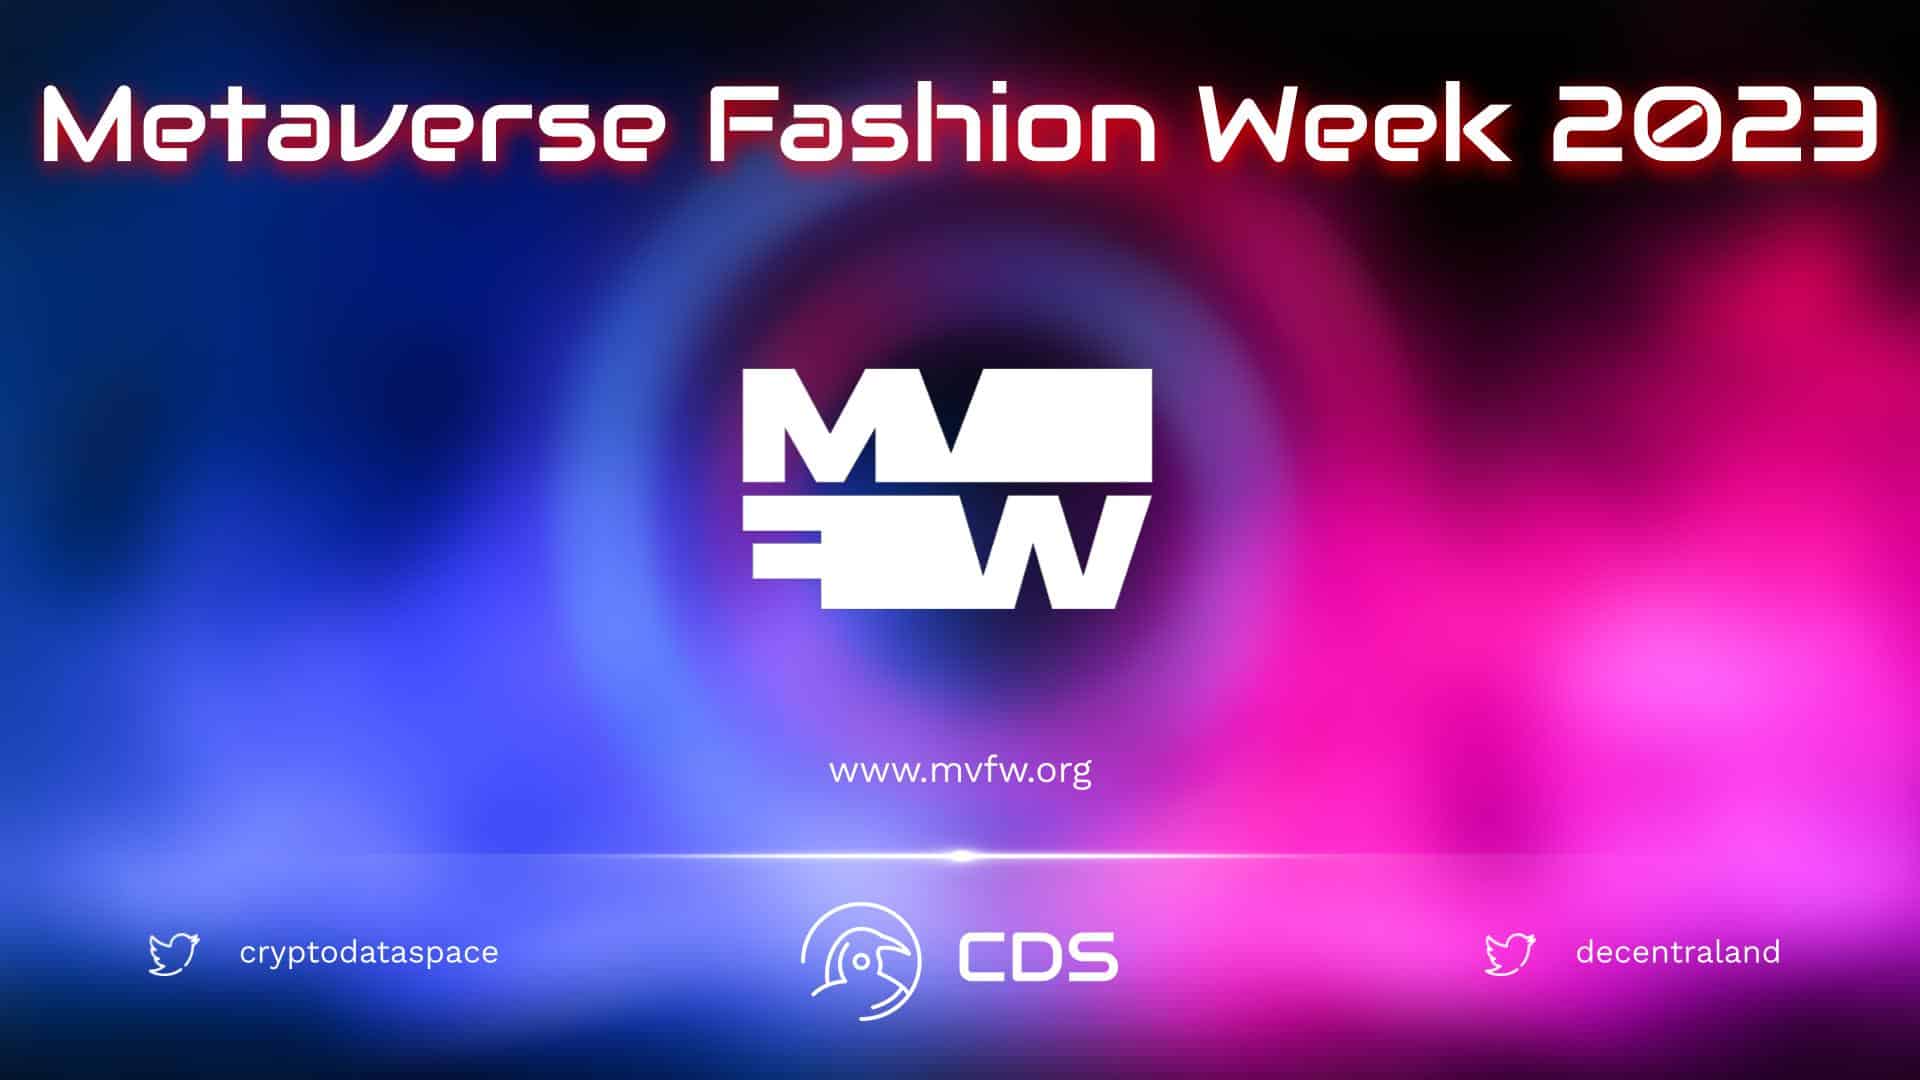 Metaverse Fashion Week 2023 by Decentraland